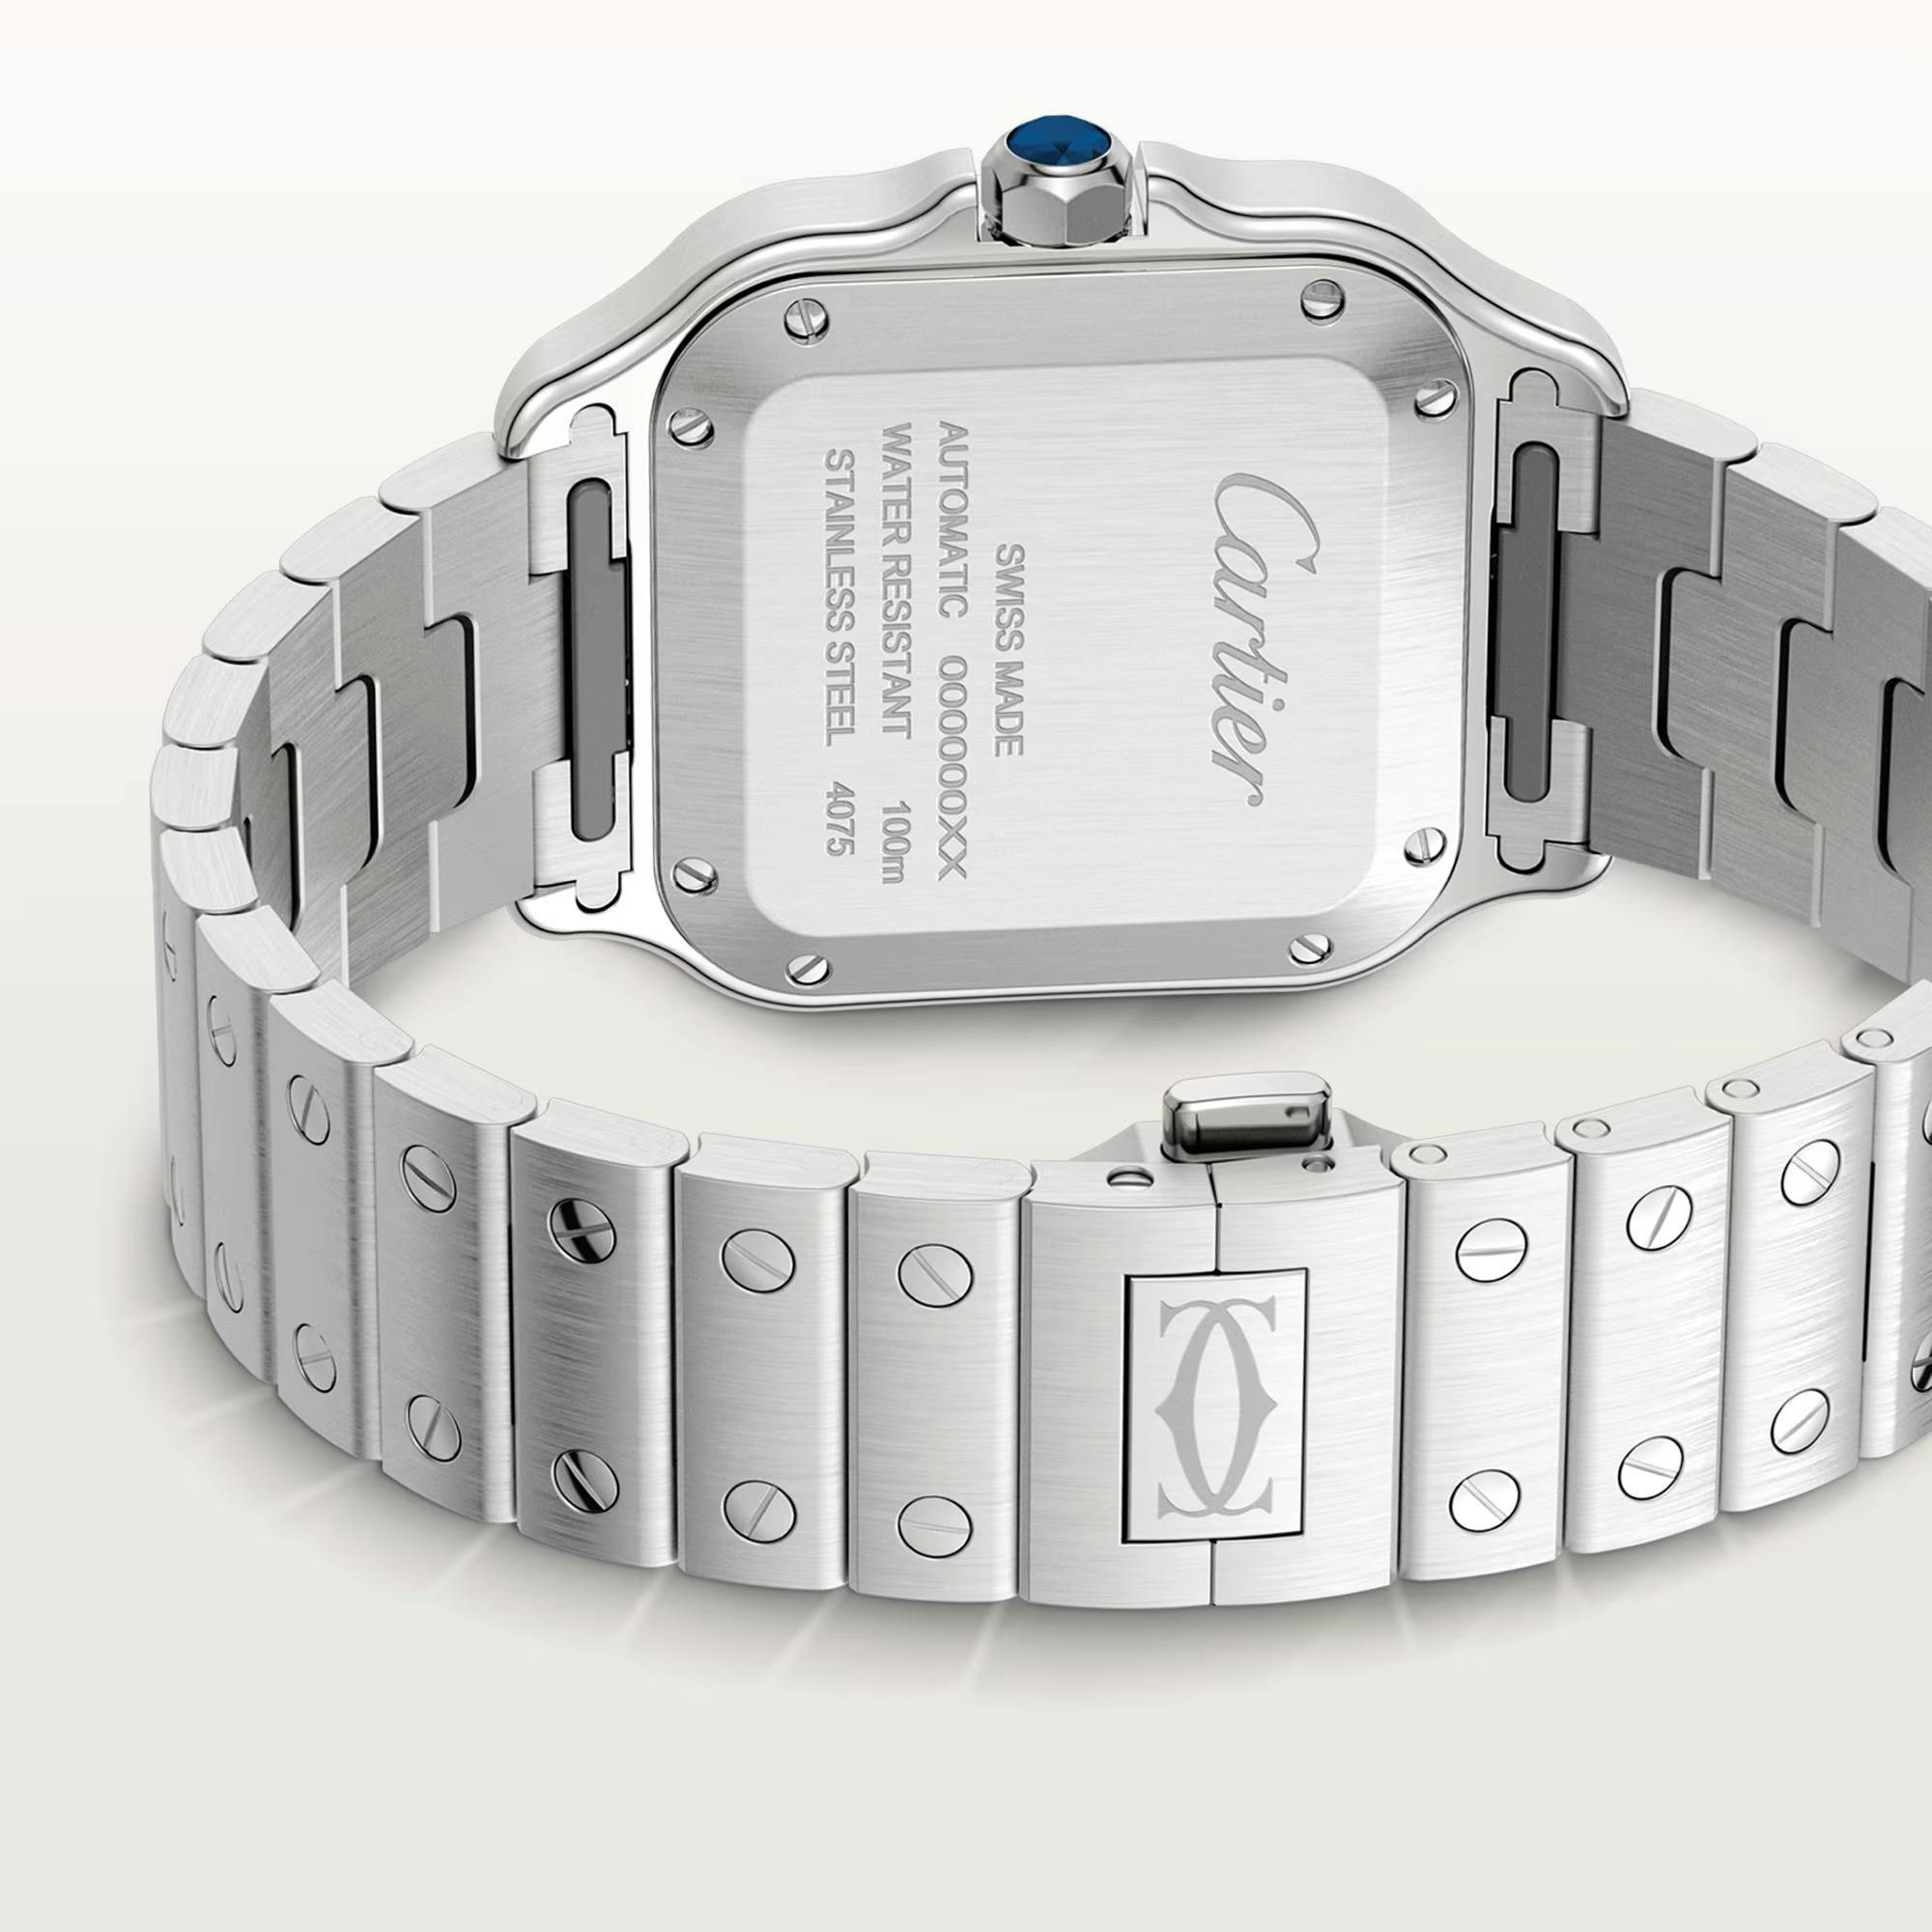 Santos de Cartier Watch with Blue Dial and Diamonds, medium model 6